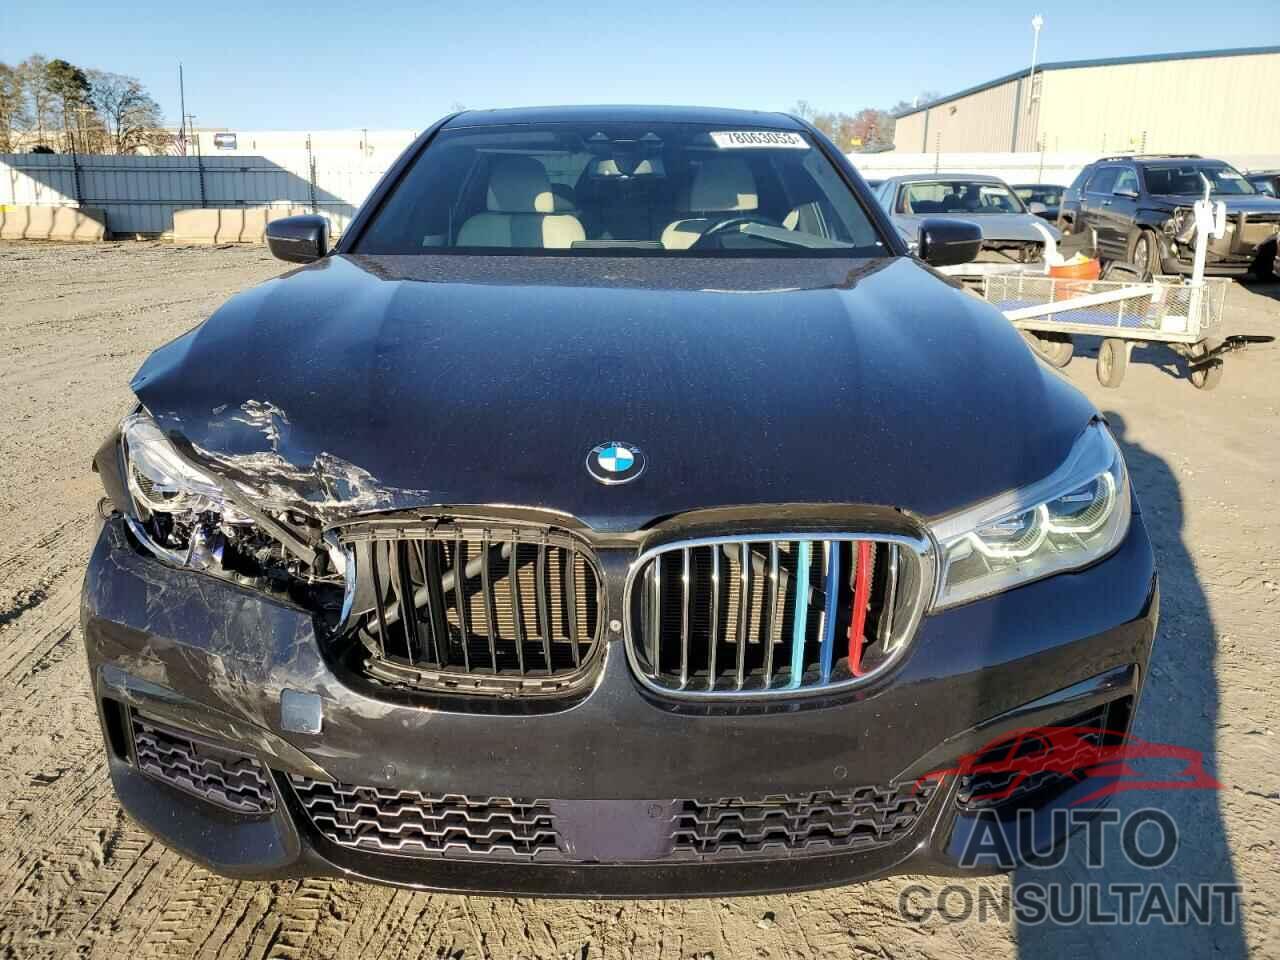 BMW 7 SERIES 2017 - WBA7F0C55HGM21071